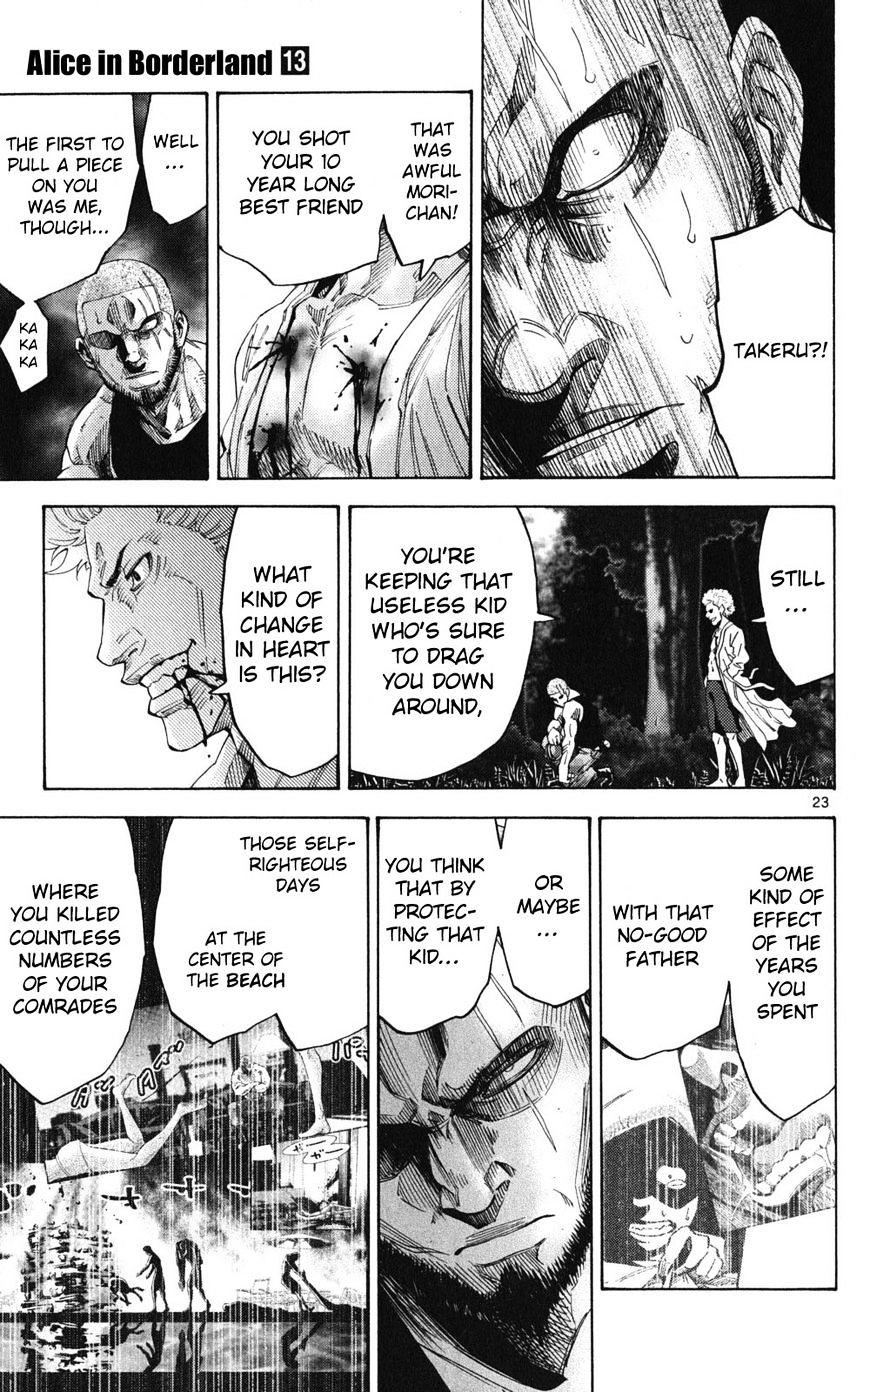 Imawa No Kuni No Alice Chapter 49.2 : Side Story 5 - King Of Spades (2) page 23 - Mangakakalot